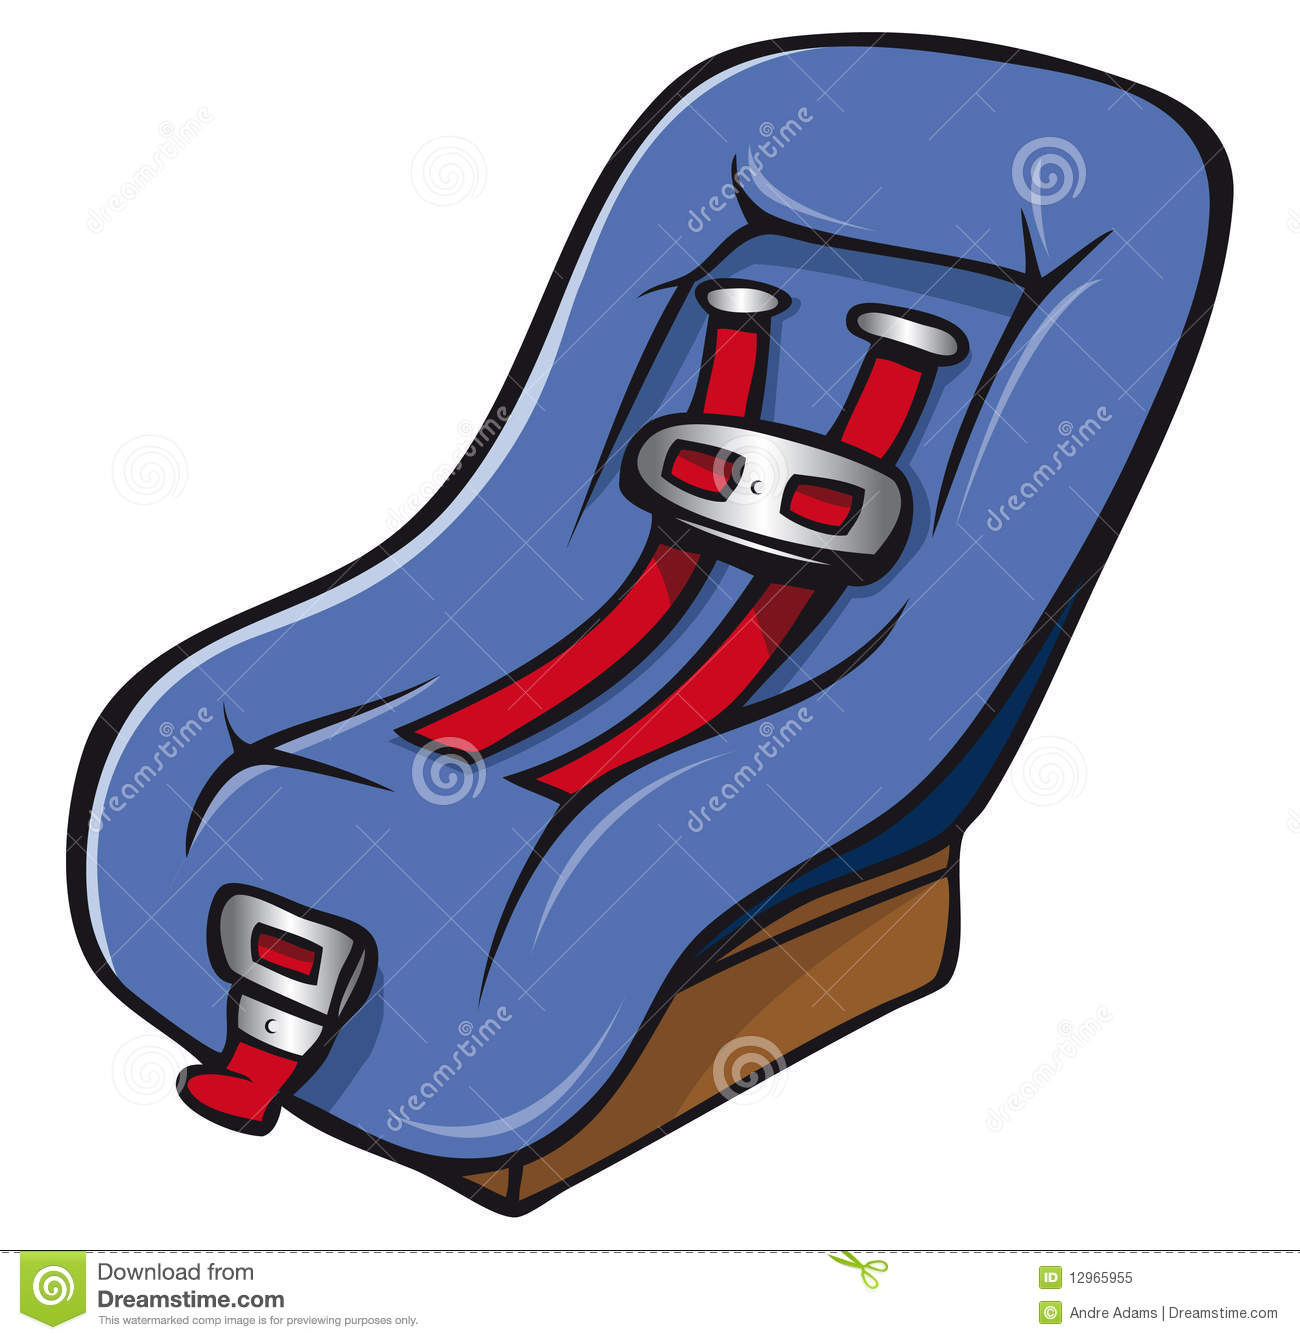 Racing Seat Clip Art At Clker